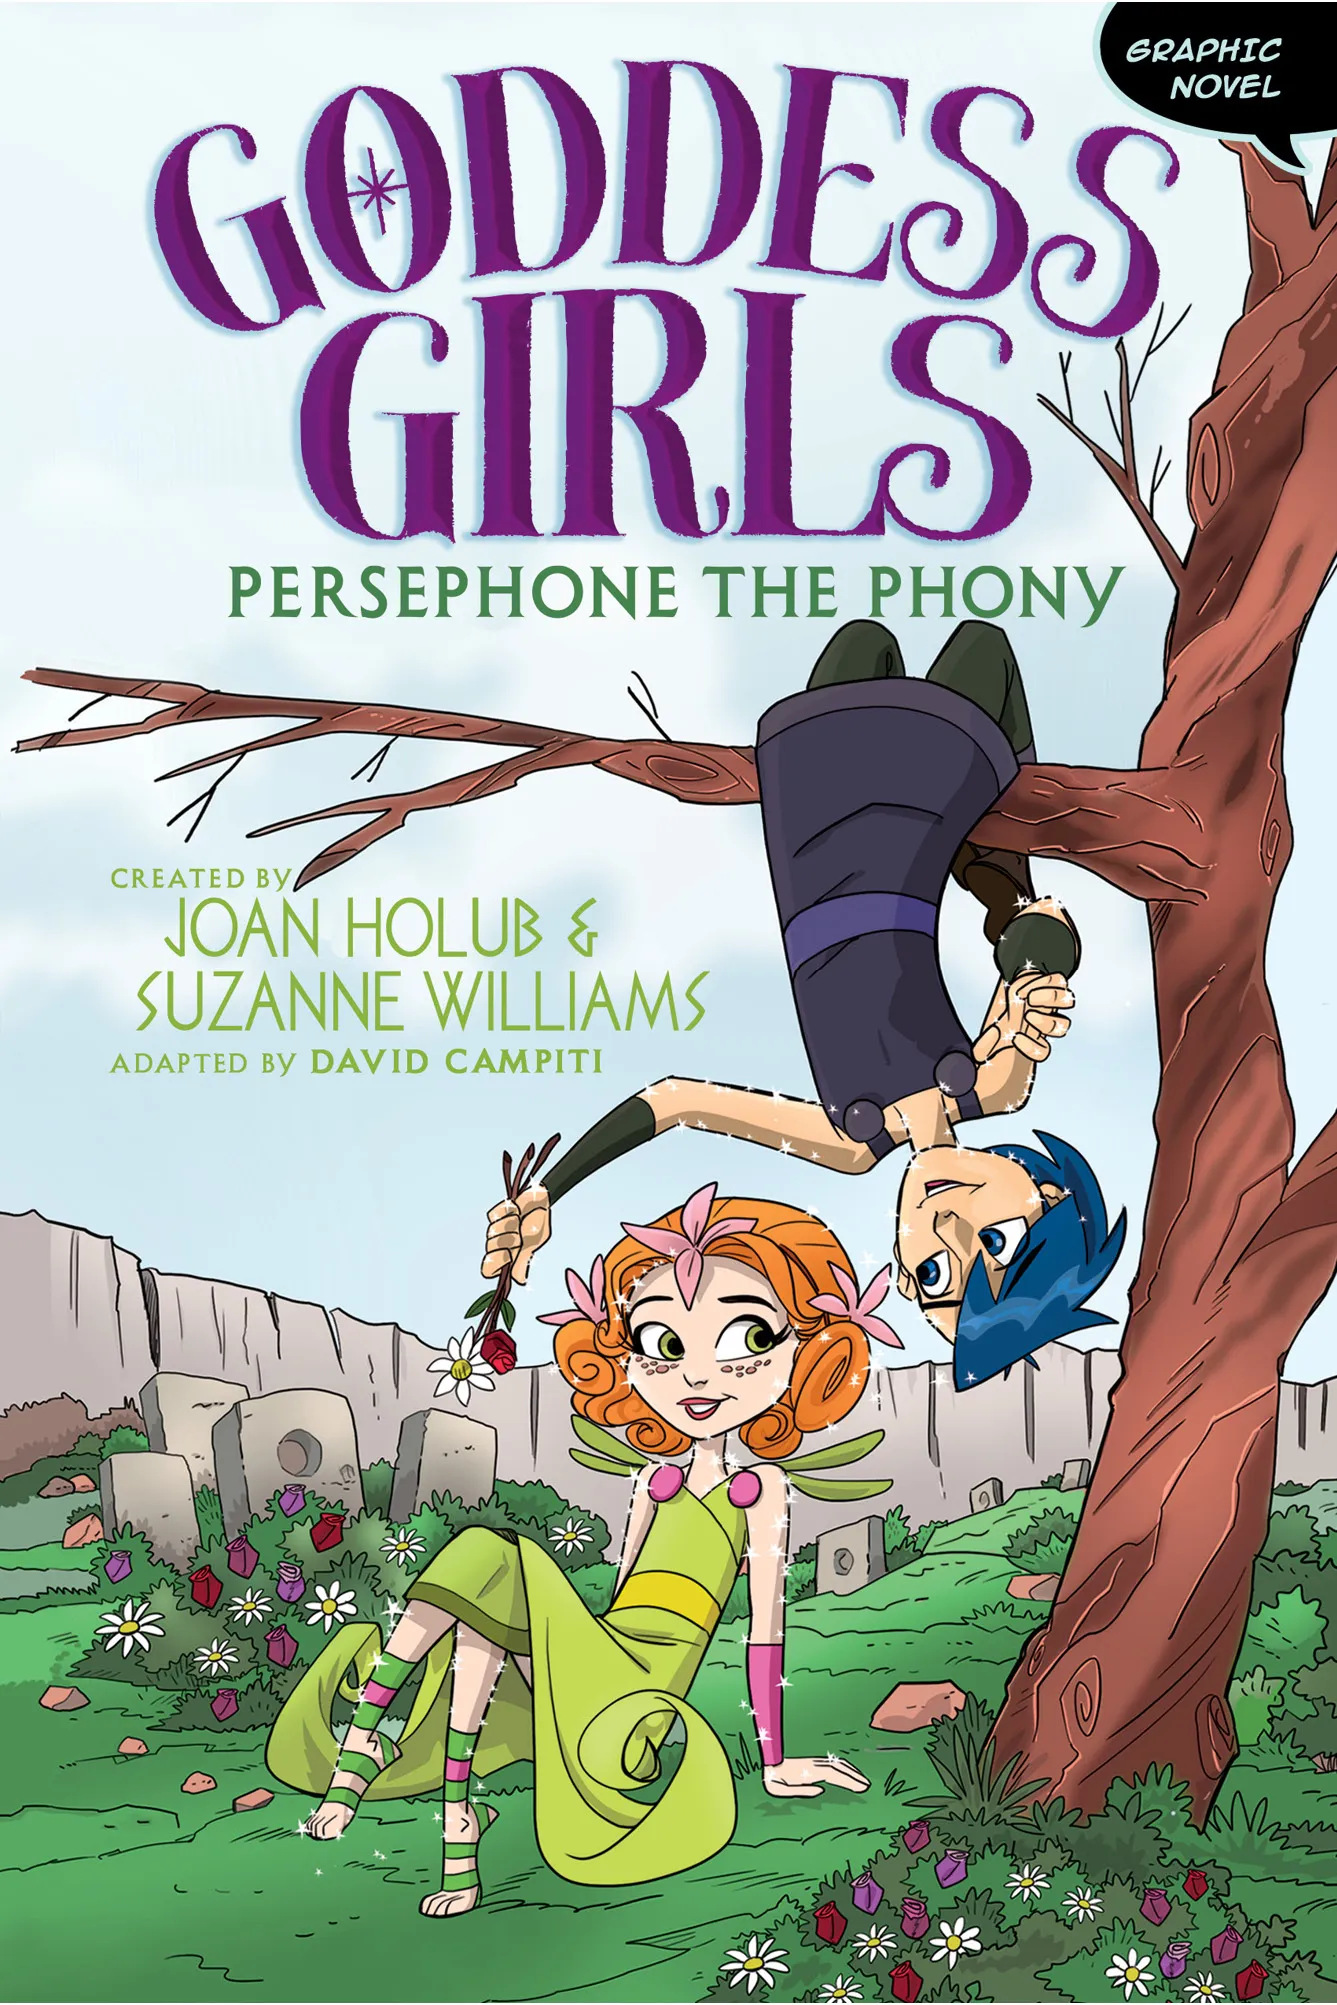 Persephone the Phony: Graphic Novel (Goddess Girls Graphic Novels #2)